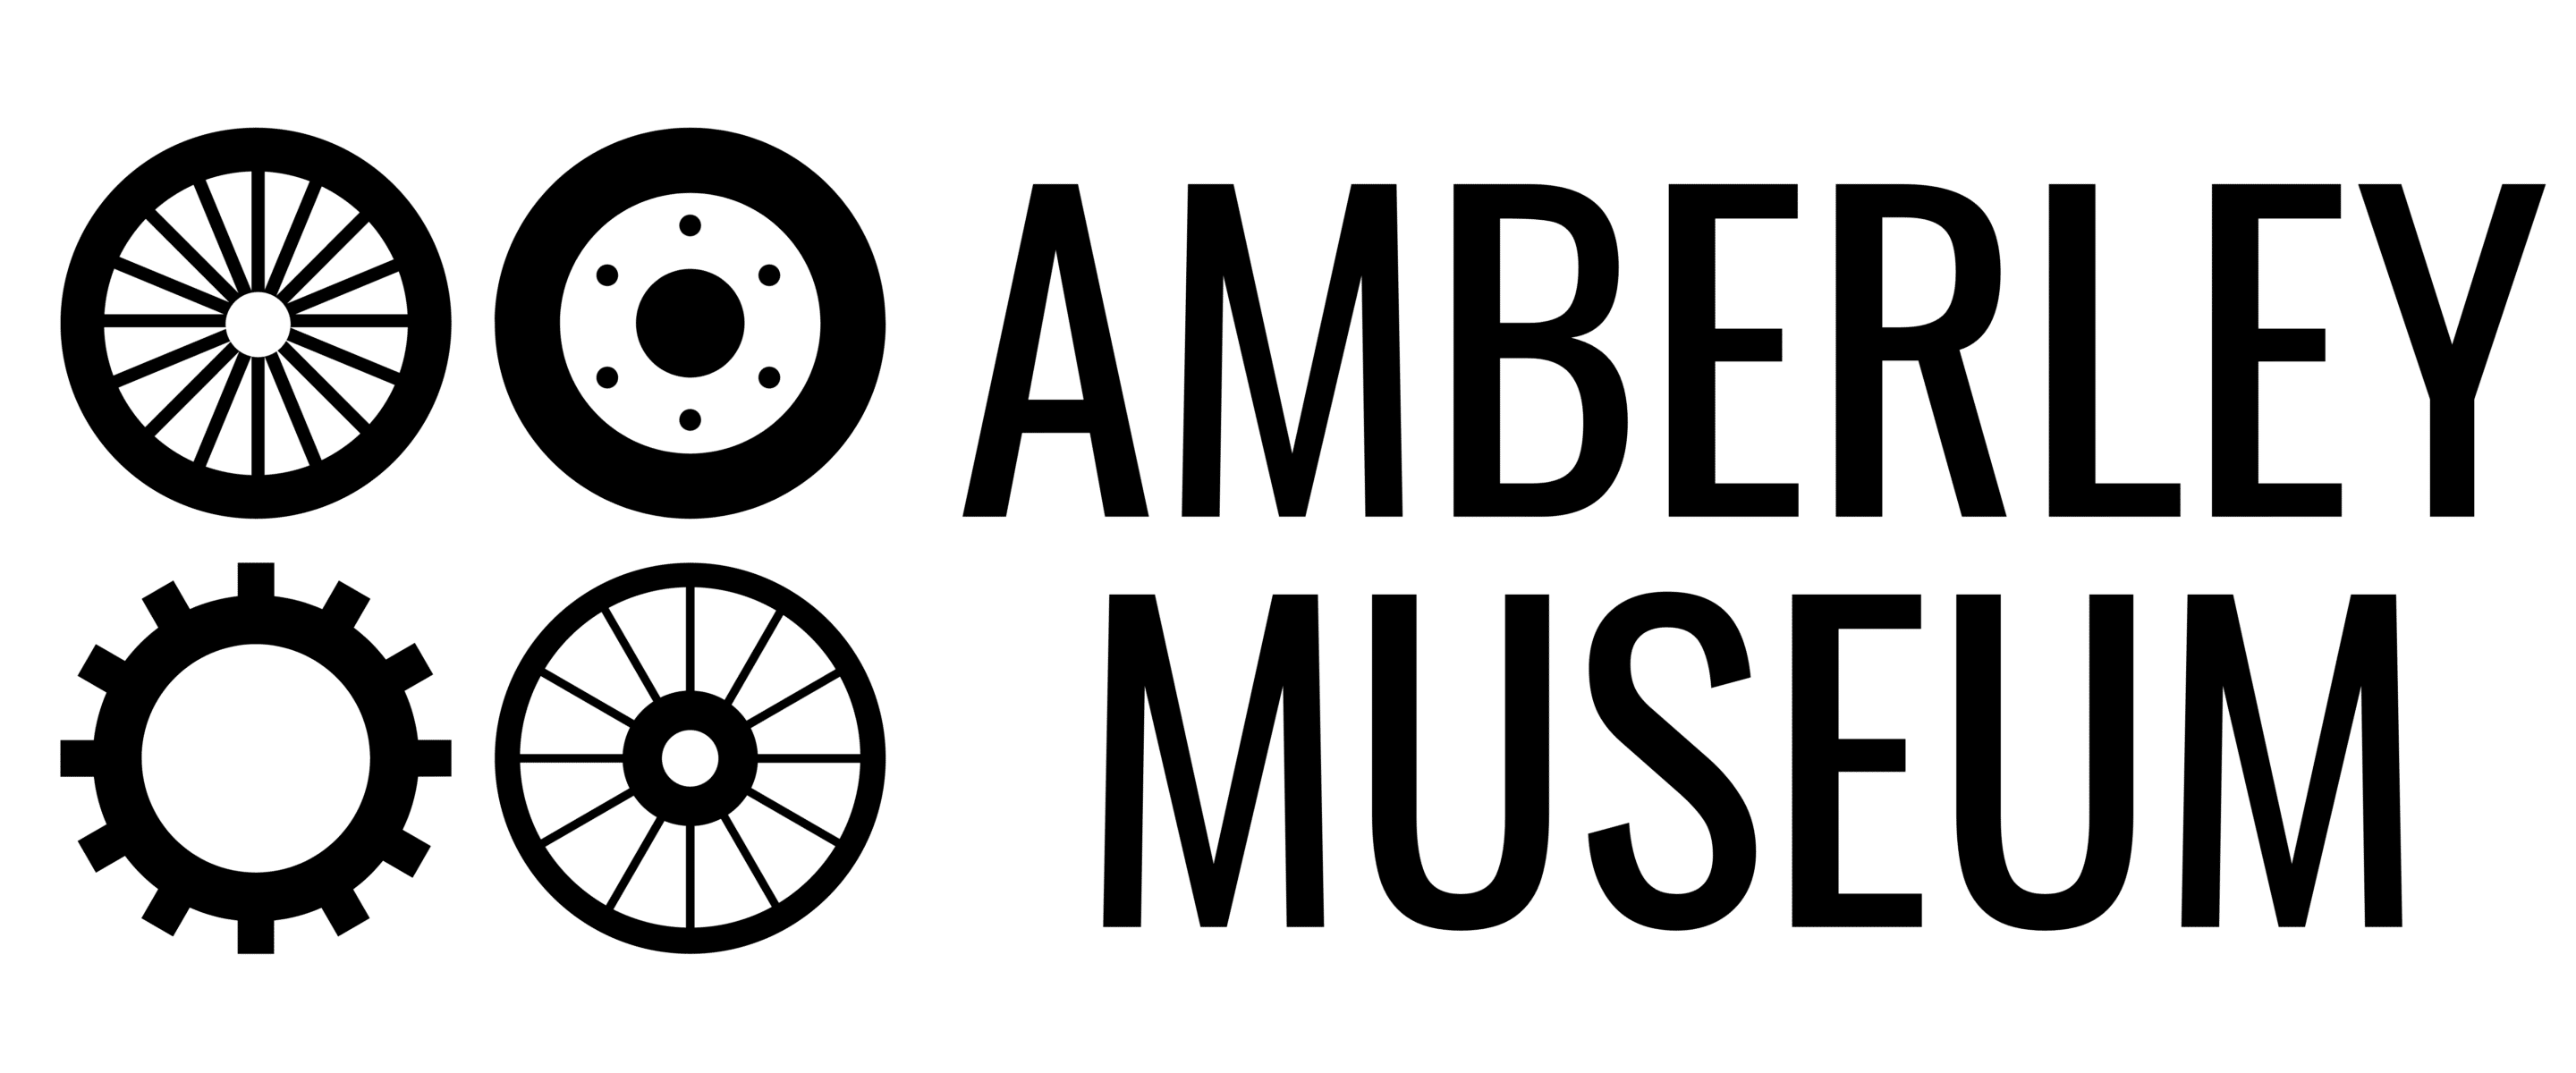 Amberley Museum